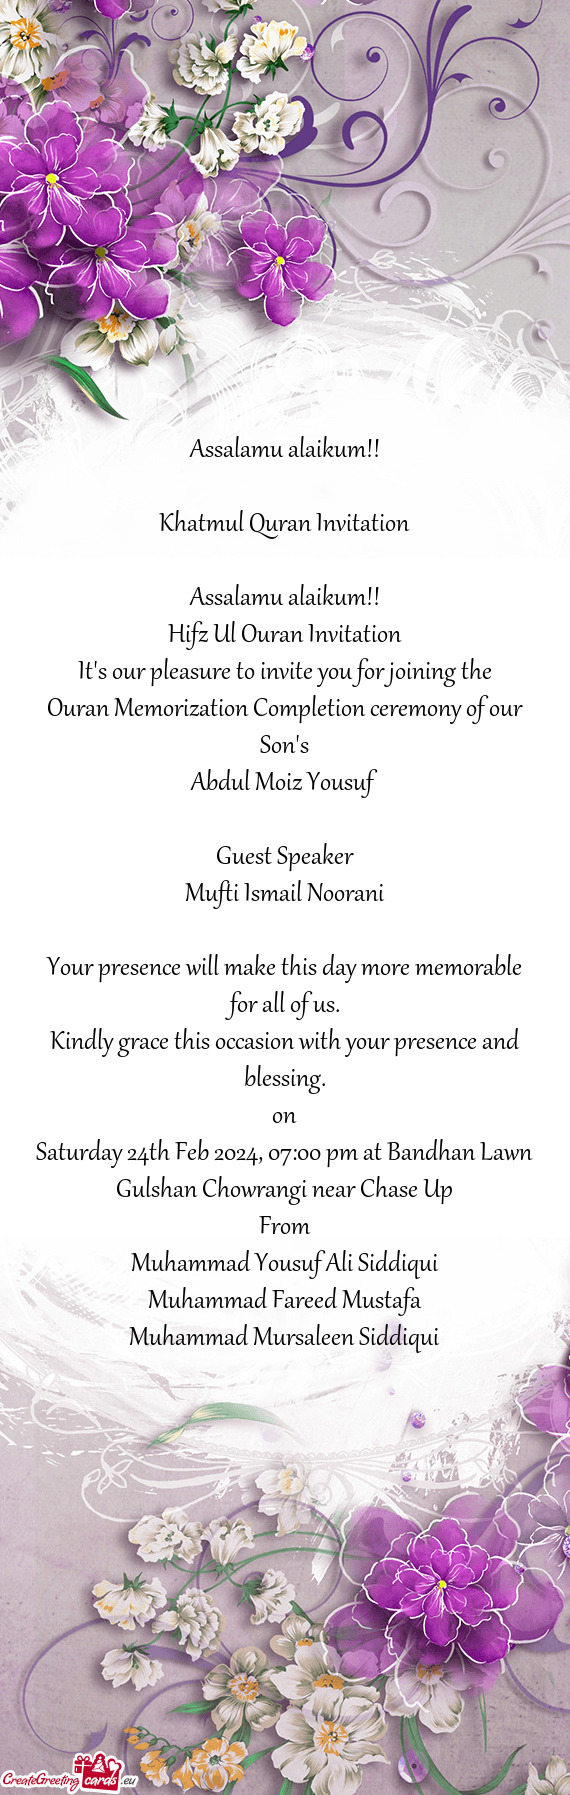 Hifz Ul Ouran Invitation